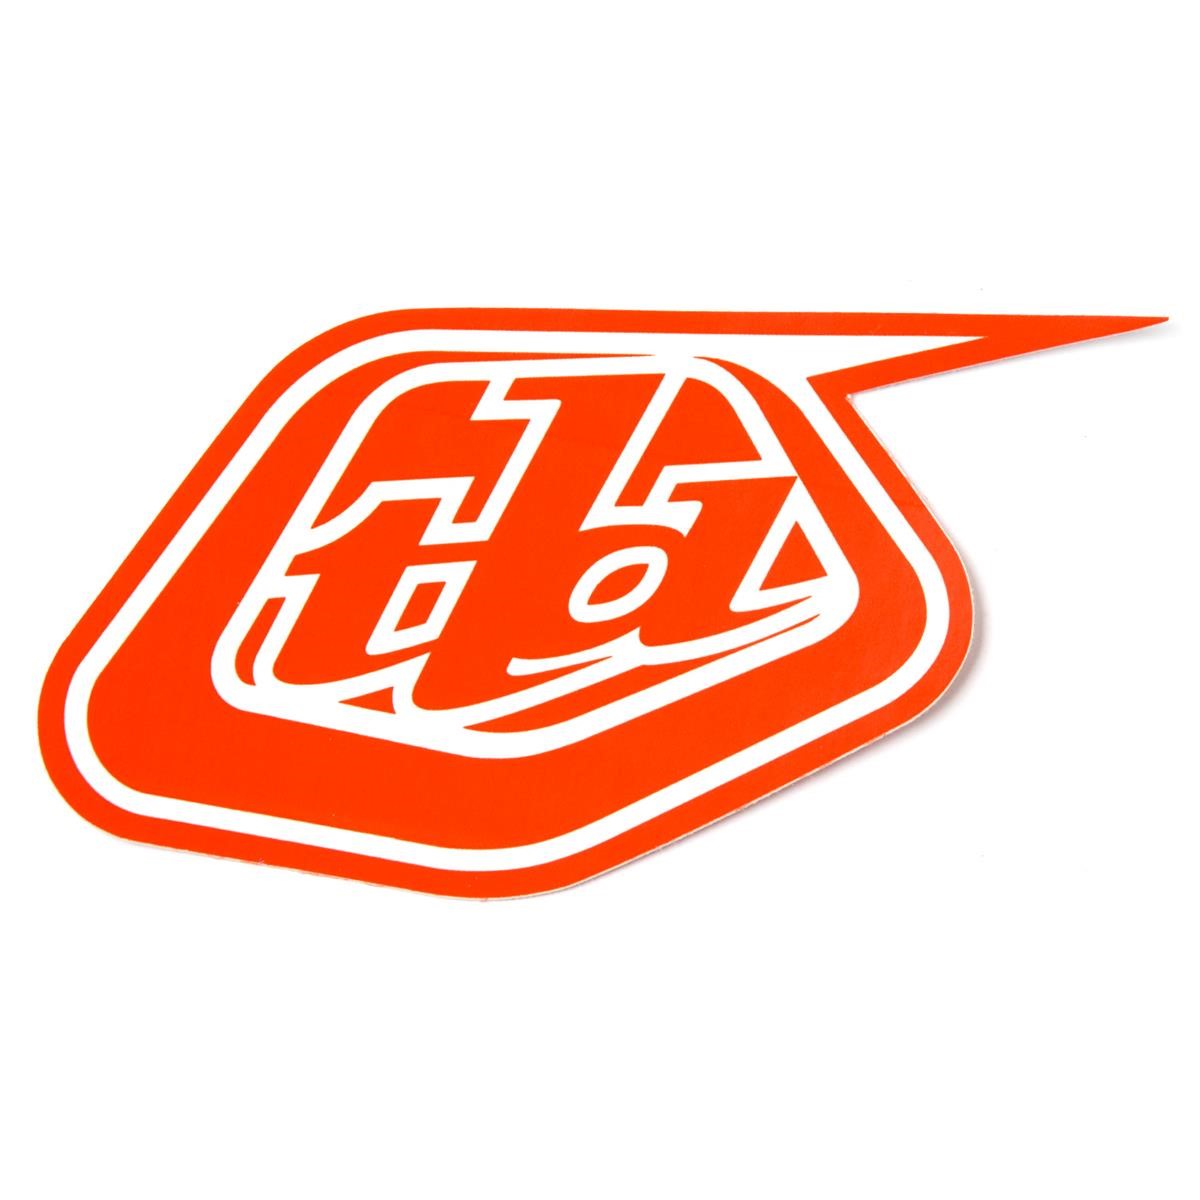 Troy Lee Designs Sticker Shield Orange - 4 inches